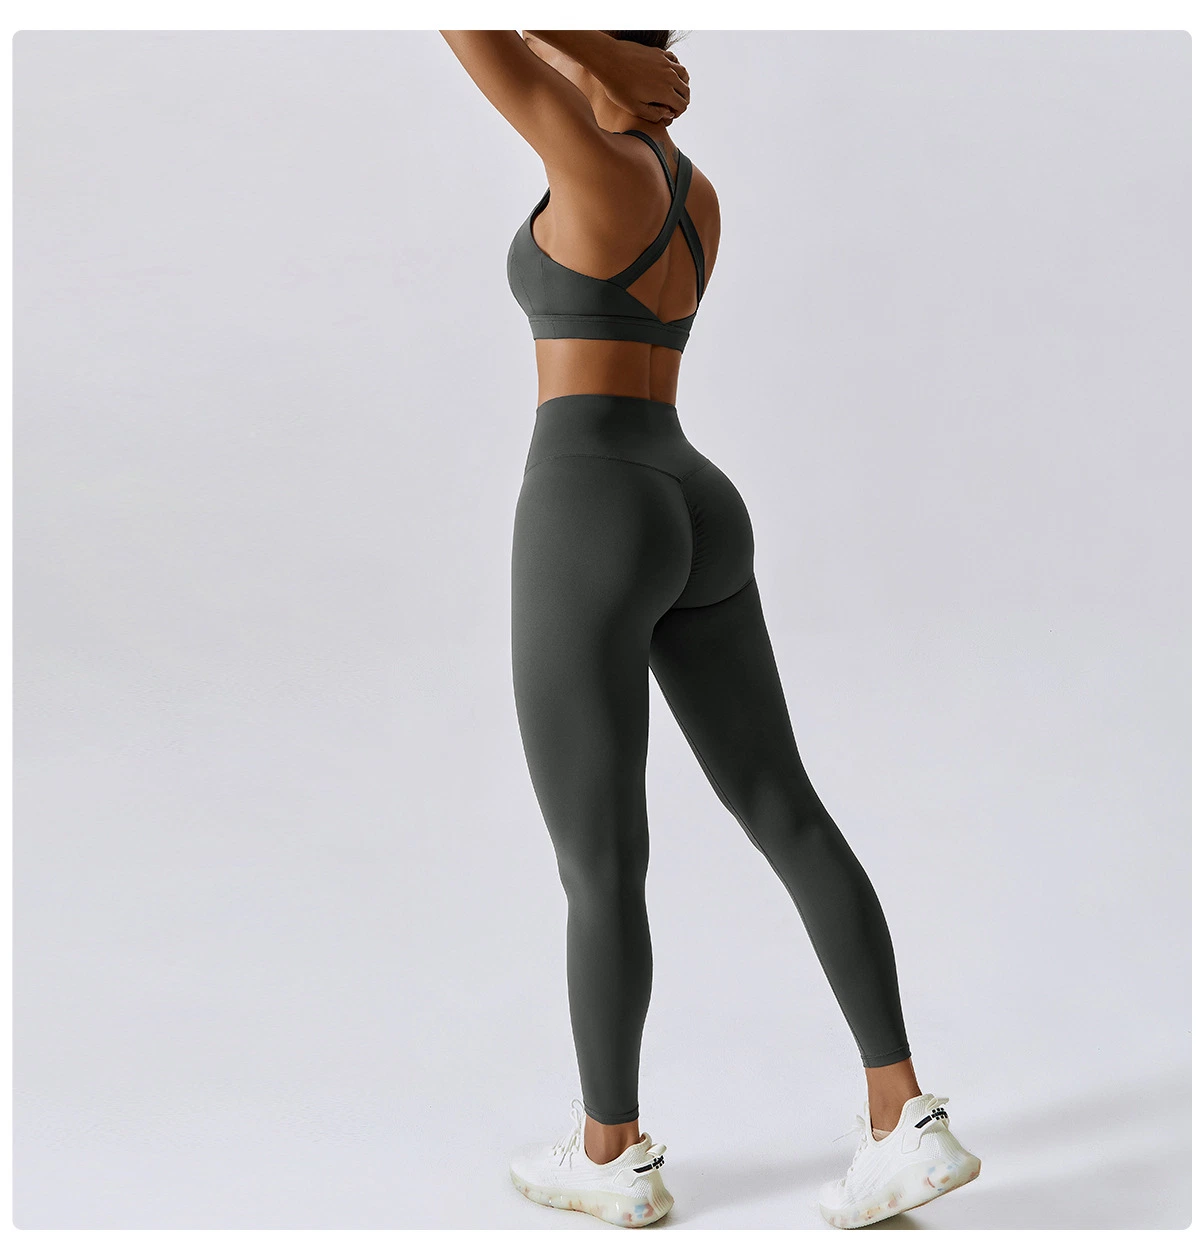 Djmc Women Sport Bra Top Solid Color Breathable Gym Leggings Fitness Workout Yoga Set for Women Sportswear